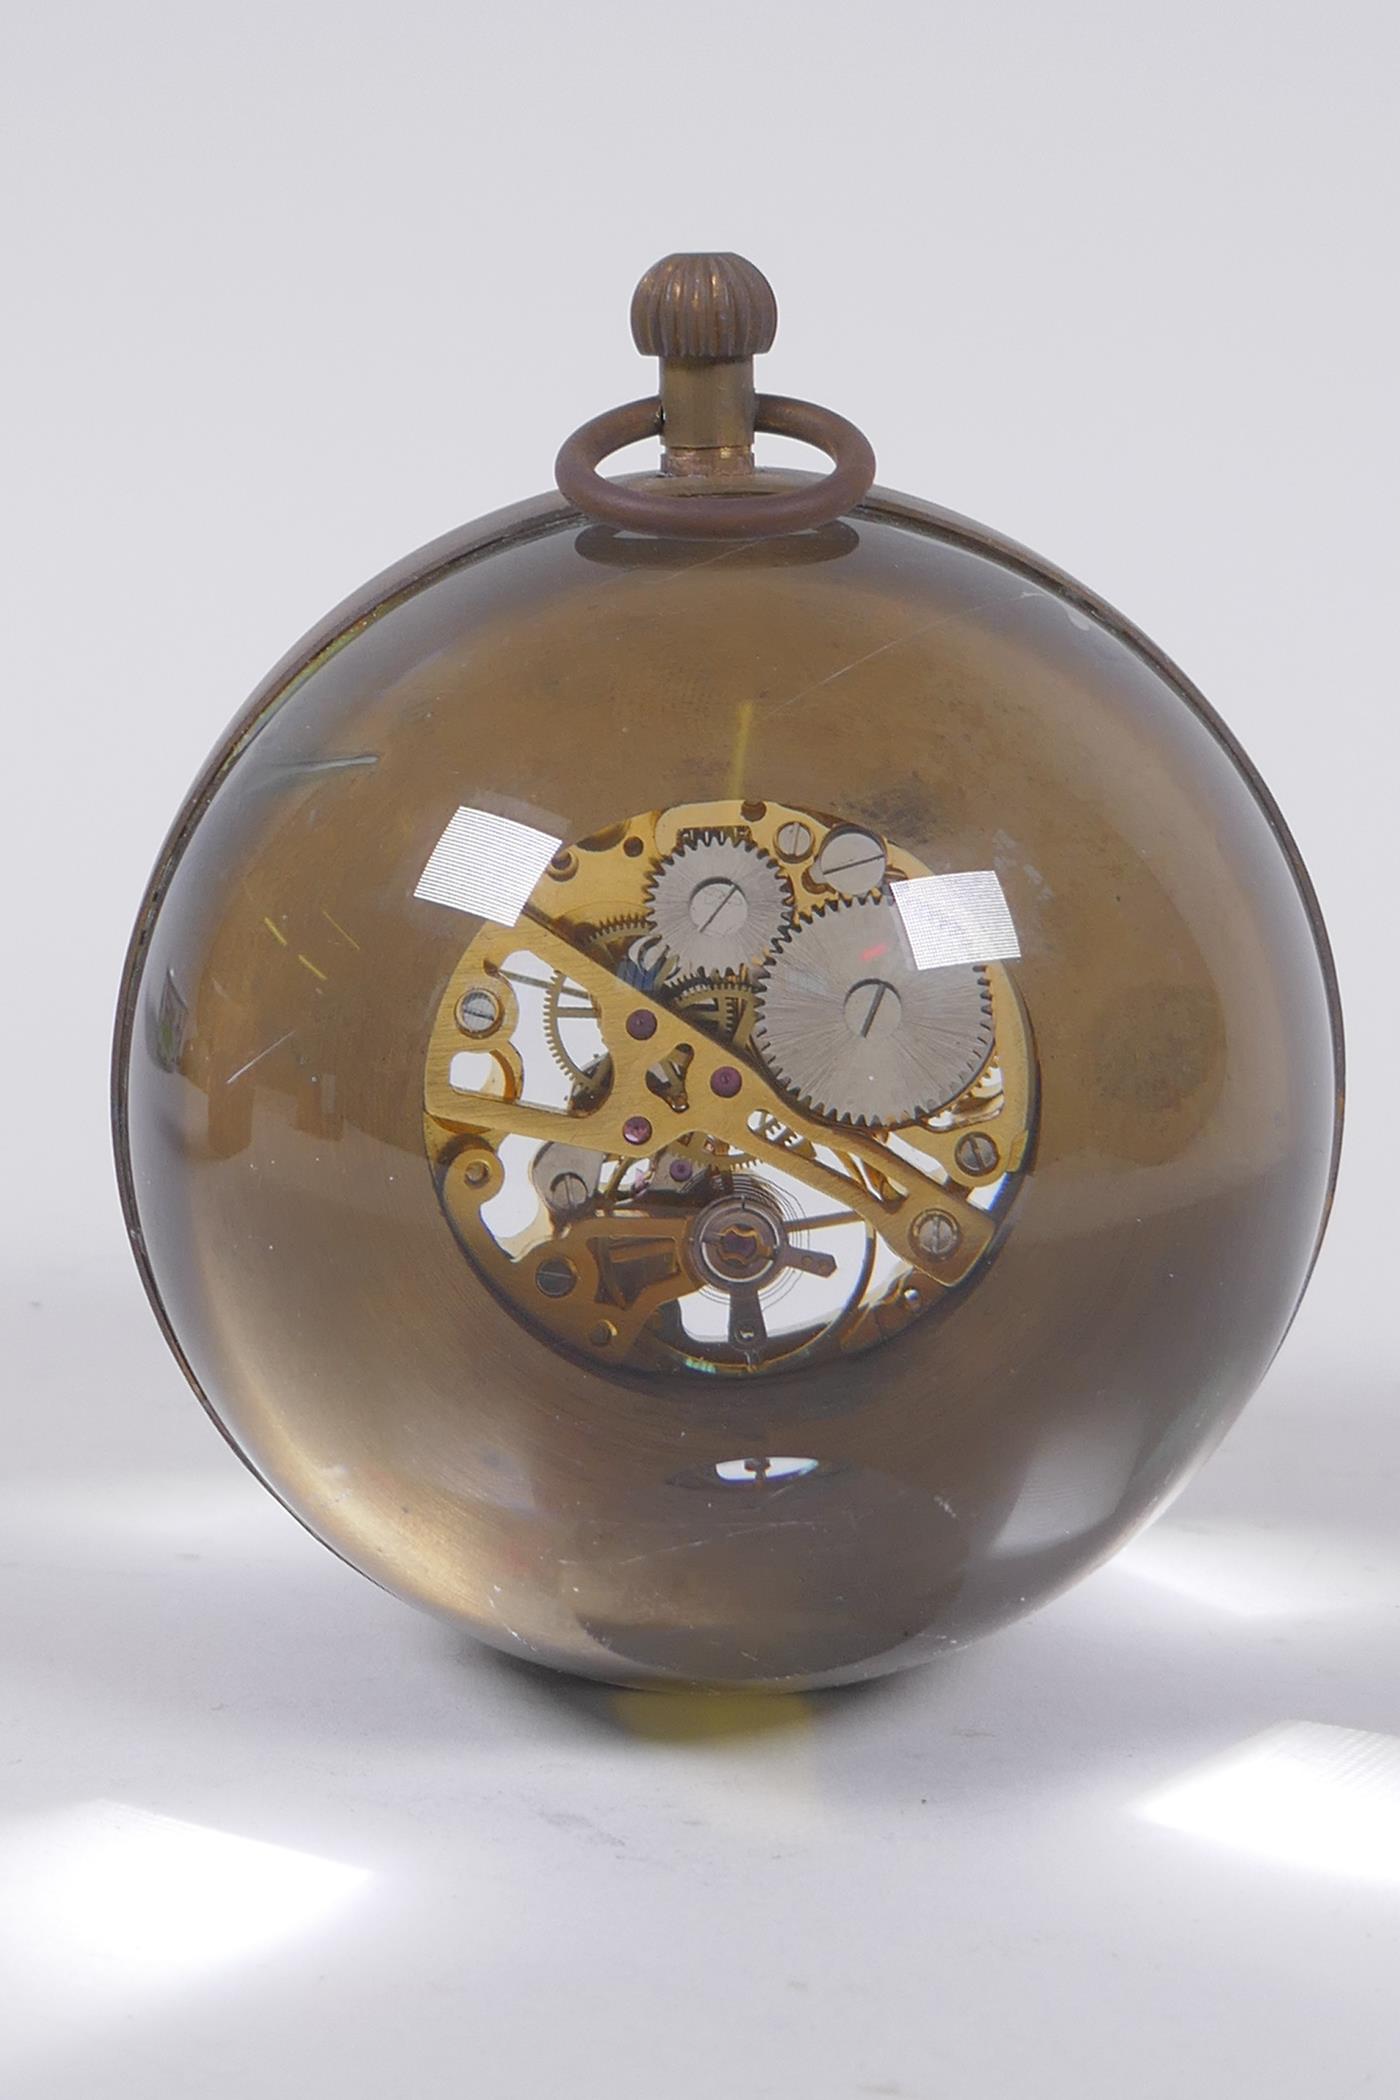 A brass and glass ball desk clock, 8cm diameter - Image 3 of 3